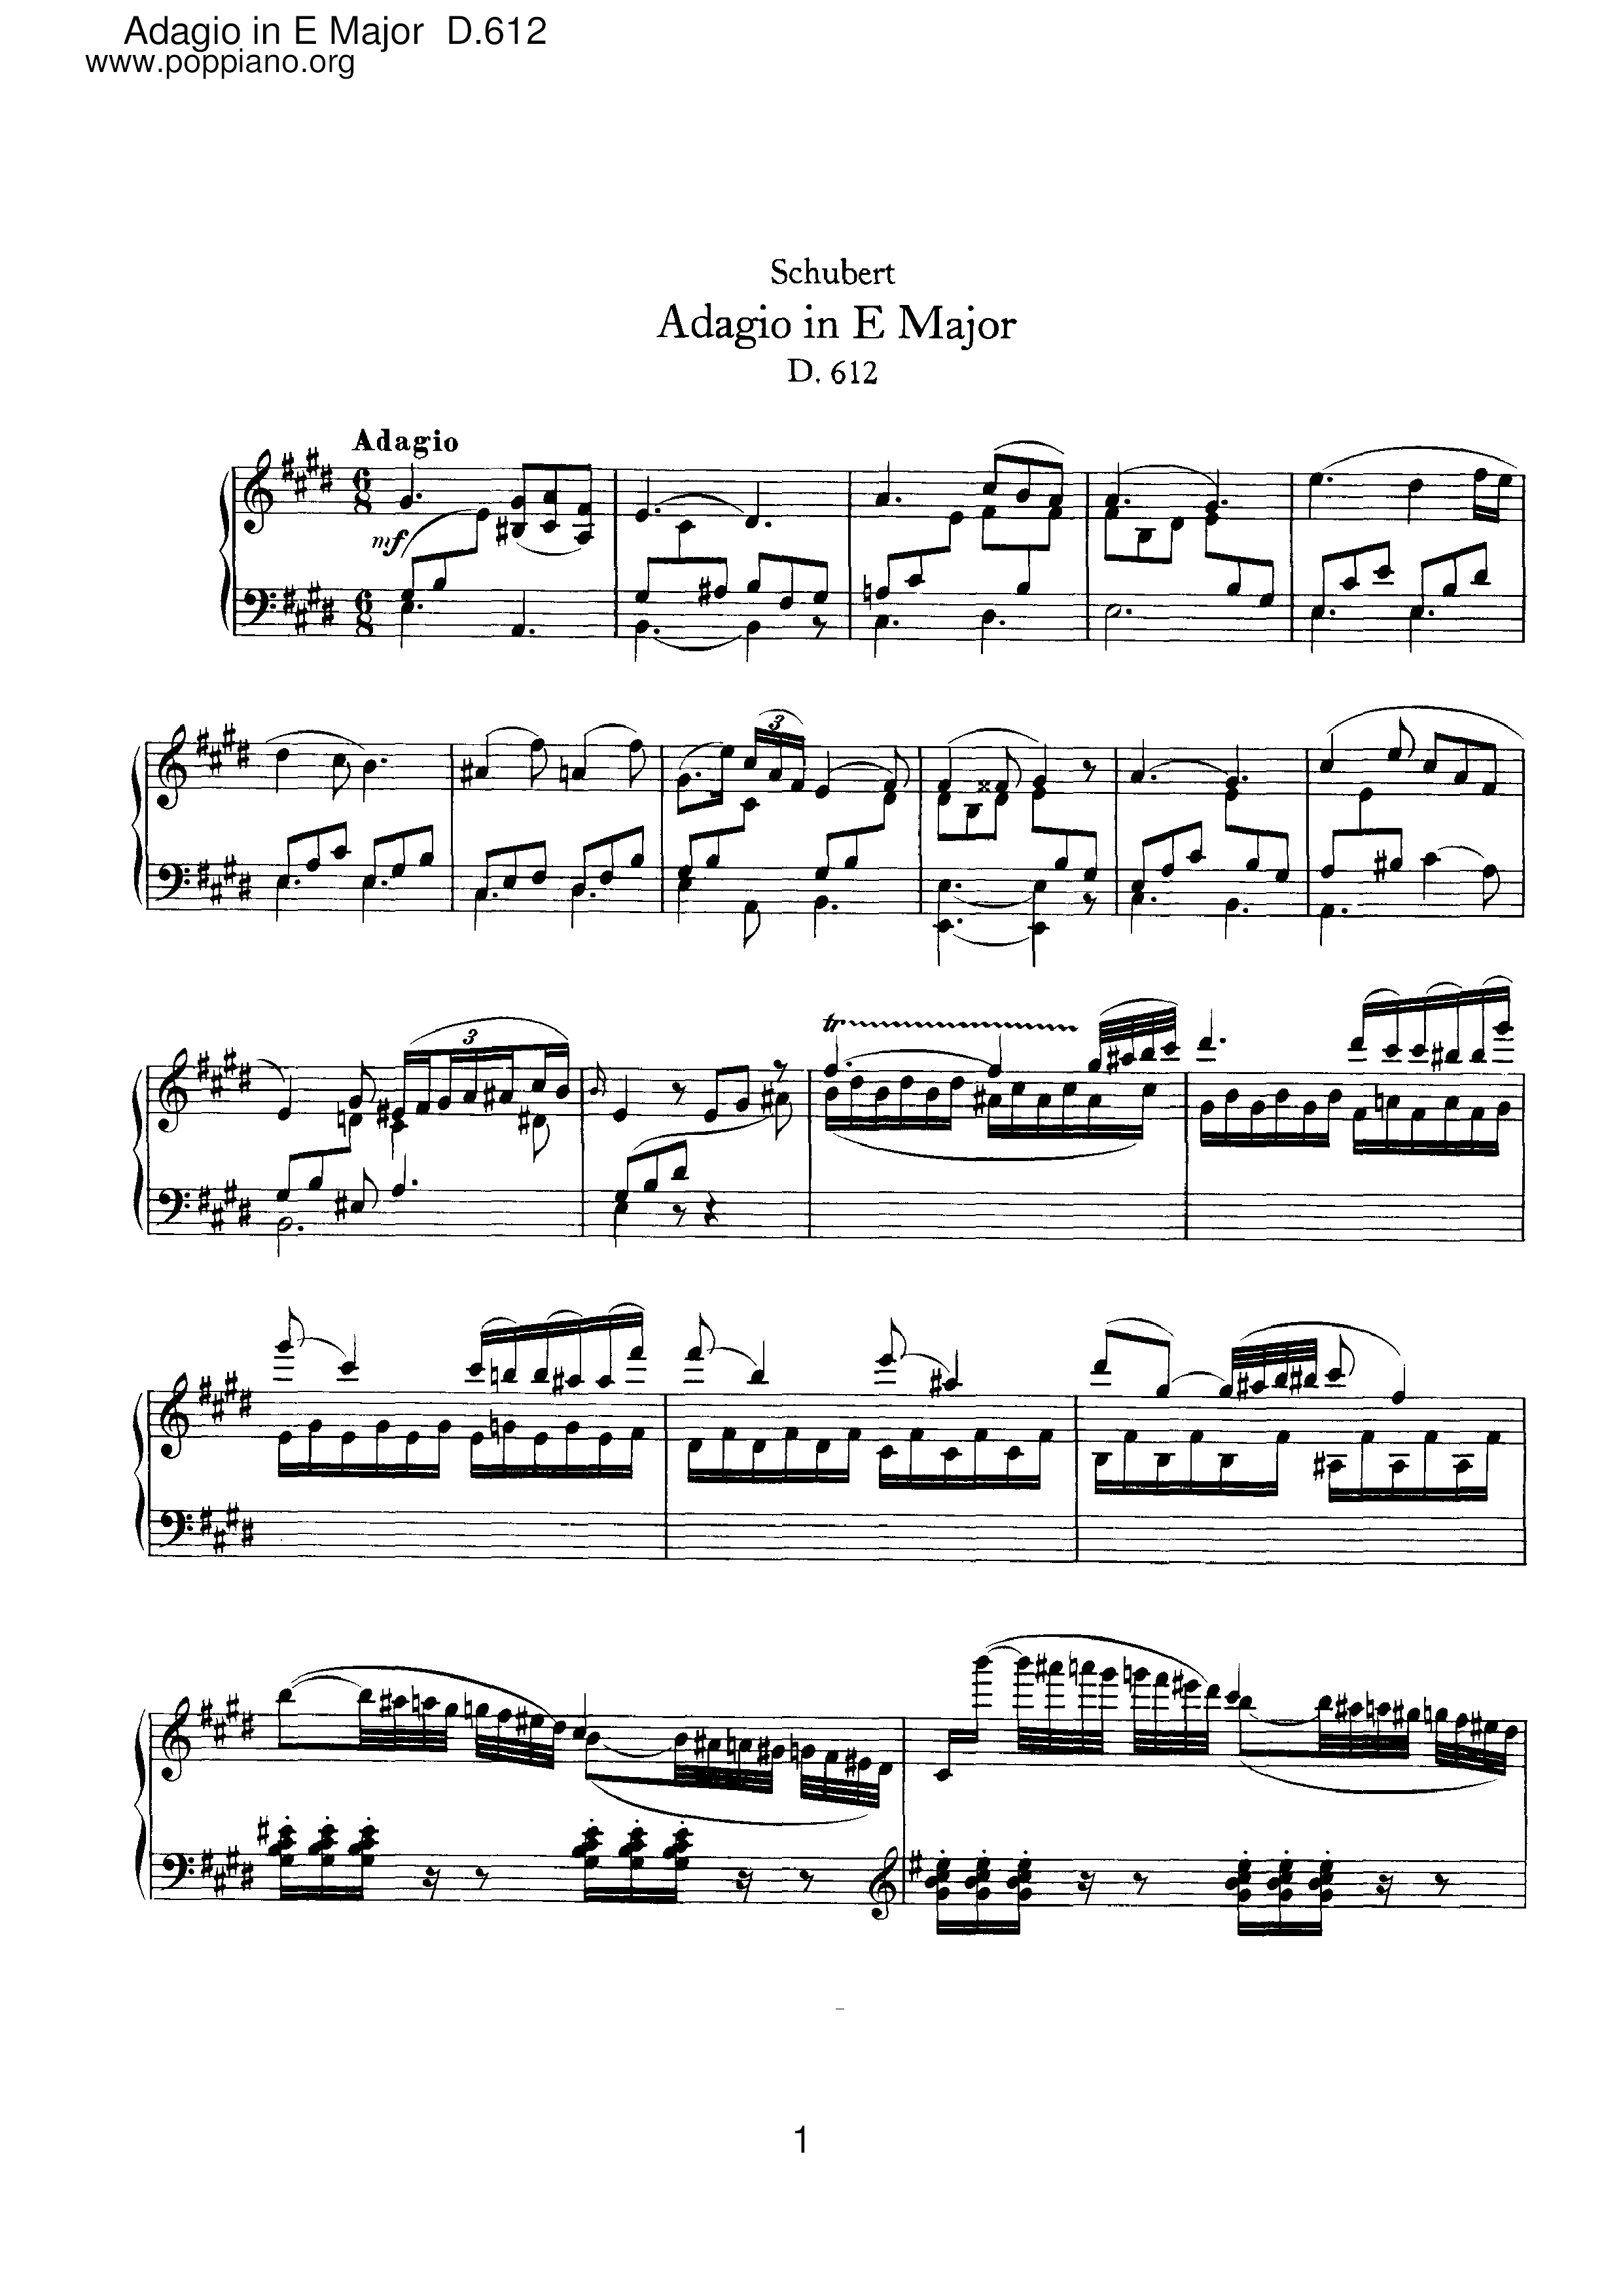 Adagio in E major, D.612 Score